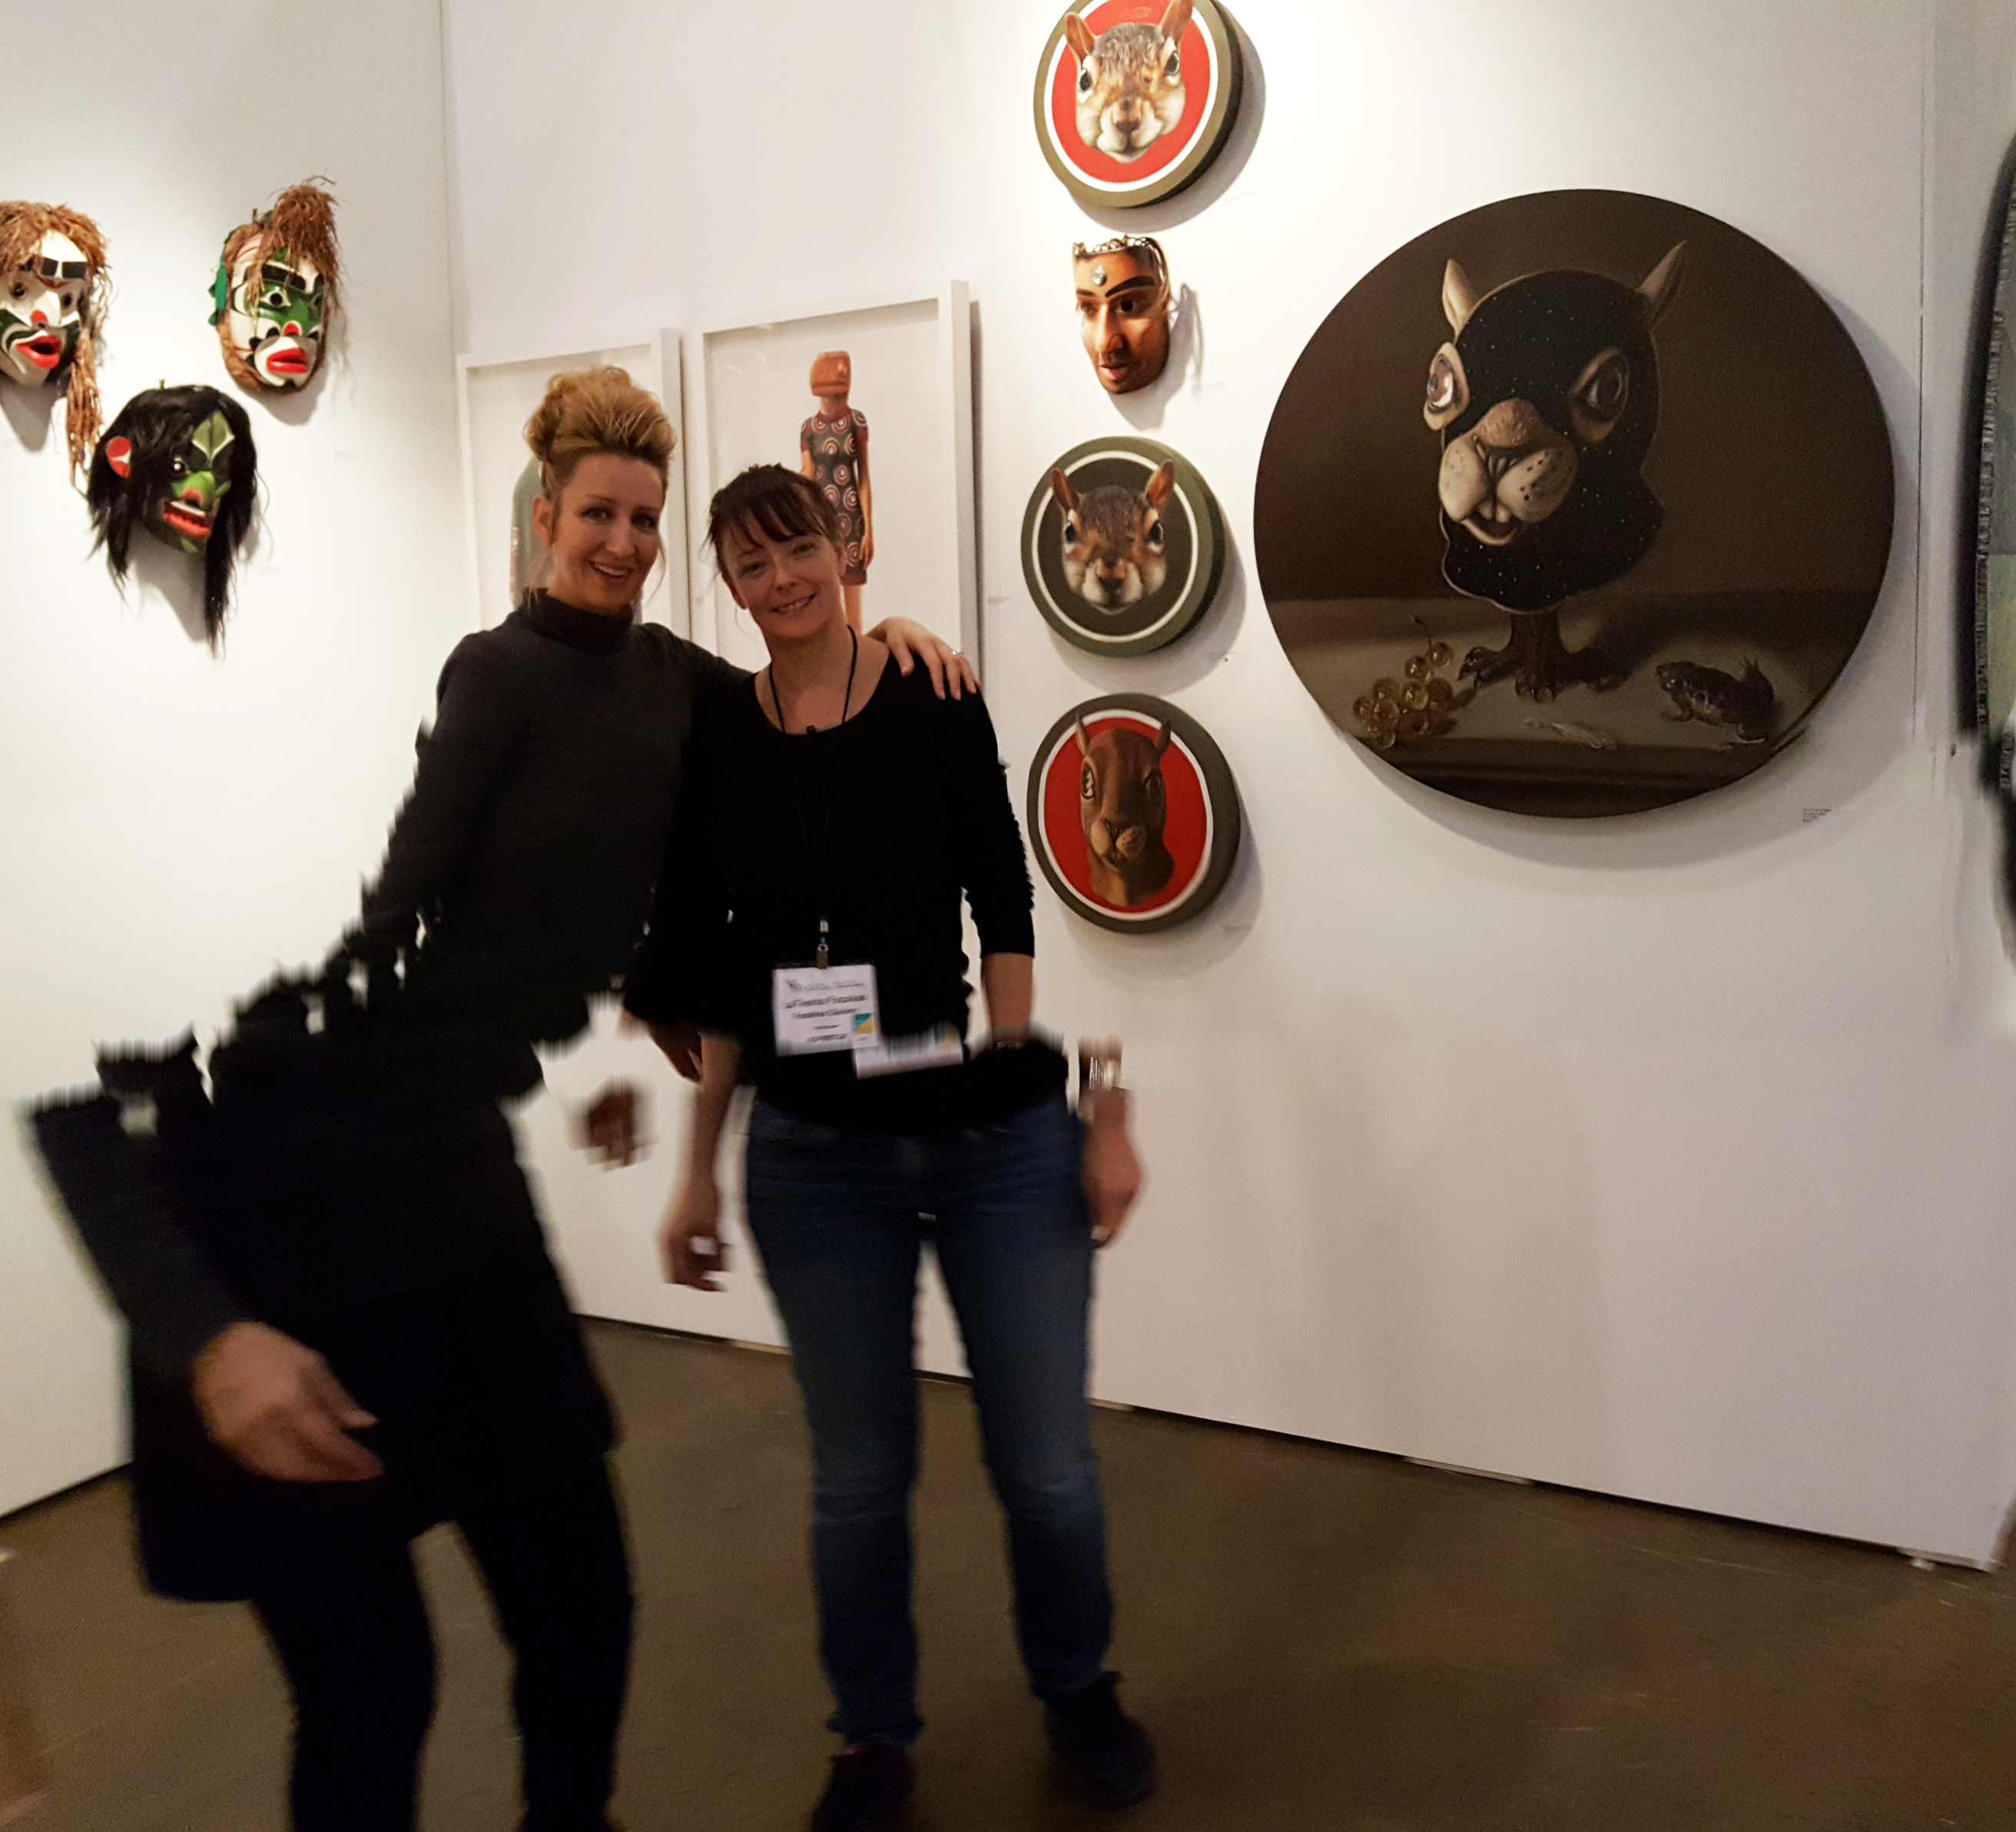 With LaTiesha Fazakas, Fazakas Gallery. Squirrealims next to Beau Dick masks.